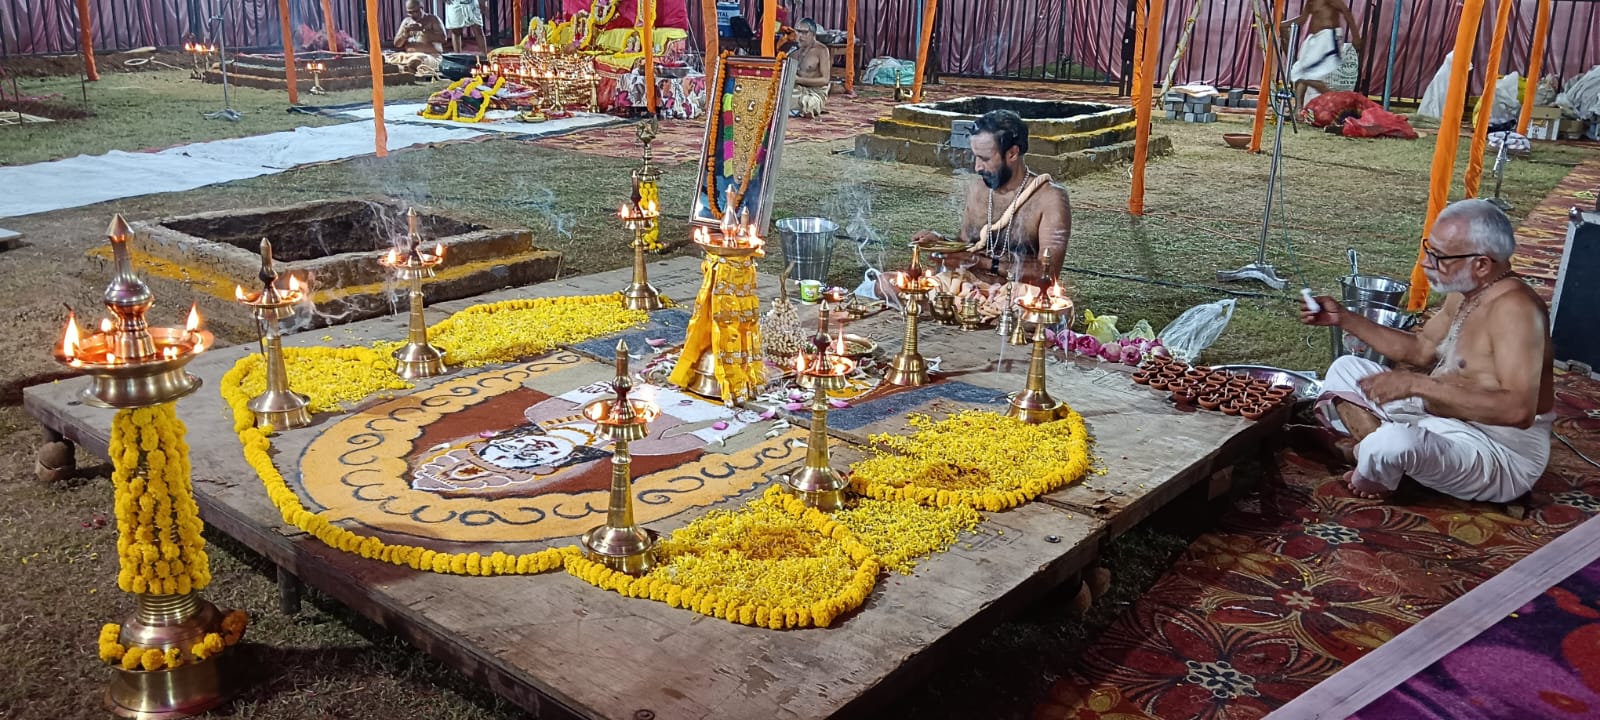 Chief Minister along with his wife and family participated in Maha Suhrit Maha Shakta Yagna, performed the ritual for public welfare, Rajiv Rakul, Founder Sri Maha Divya Desam Foundation, Chottanikkara Satyan Marar, Kerala Panch Vadyam, Raipur, Chhattisga